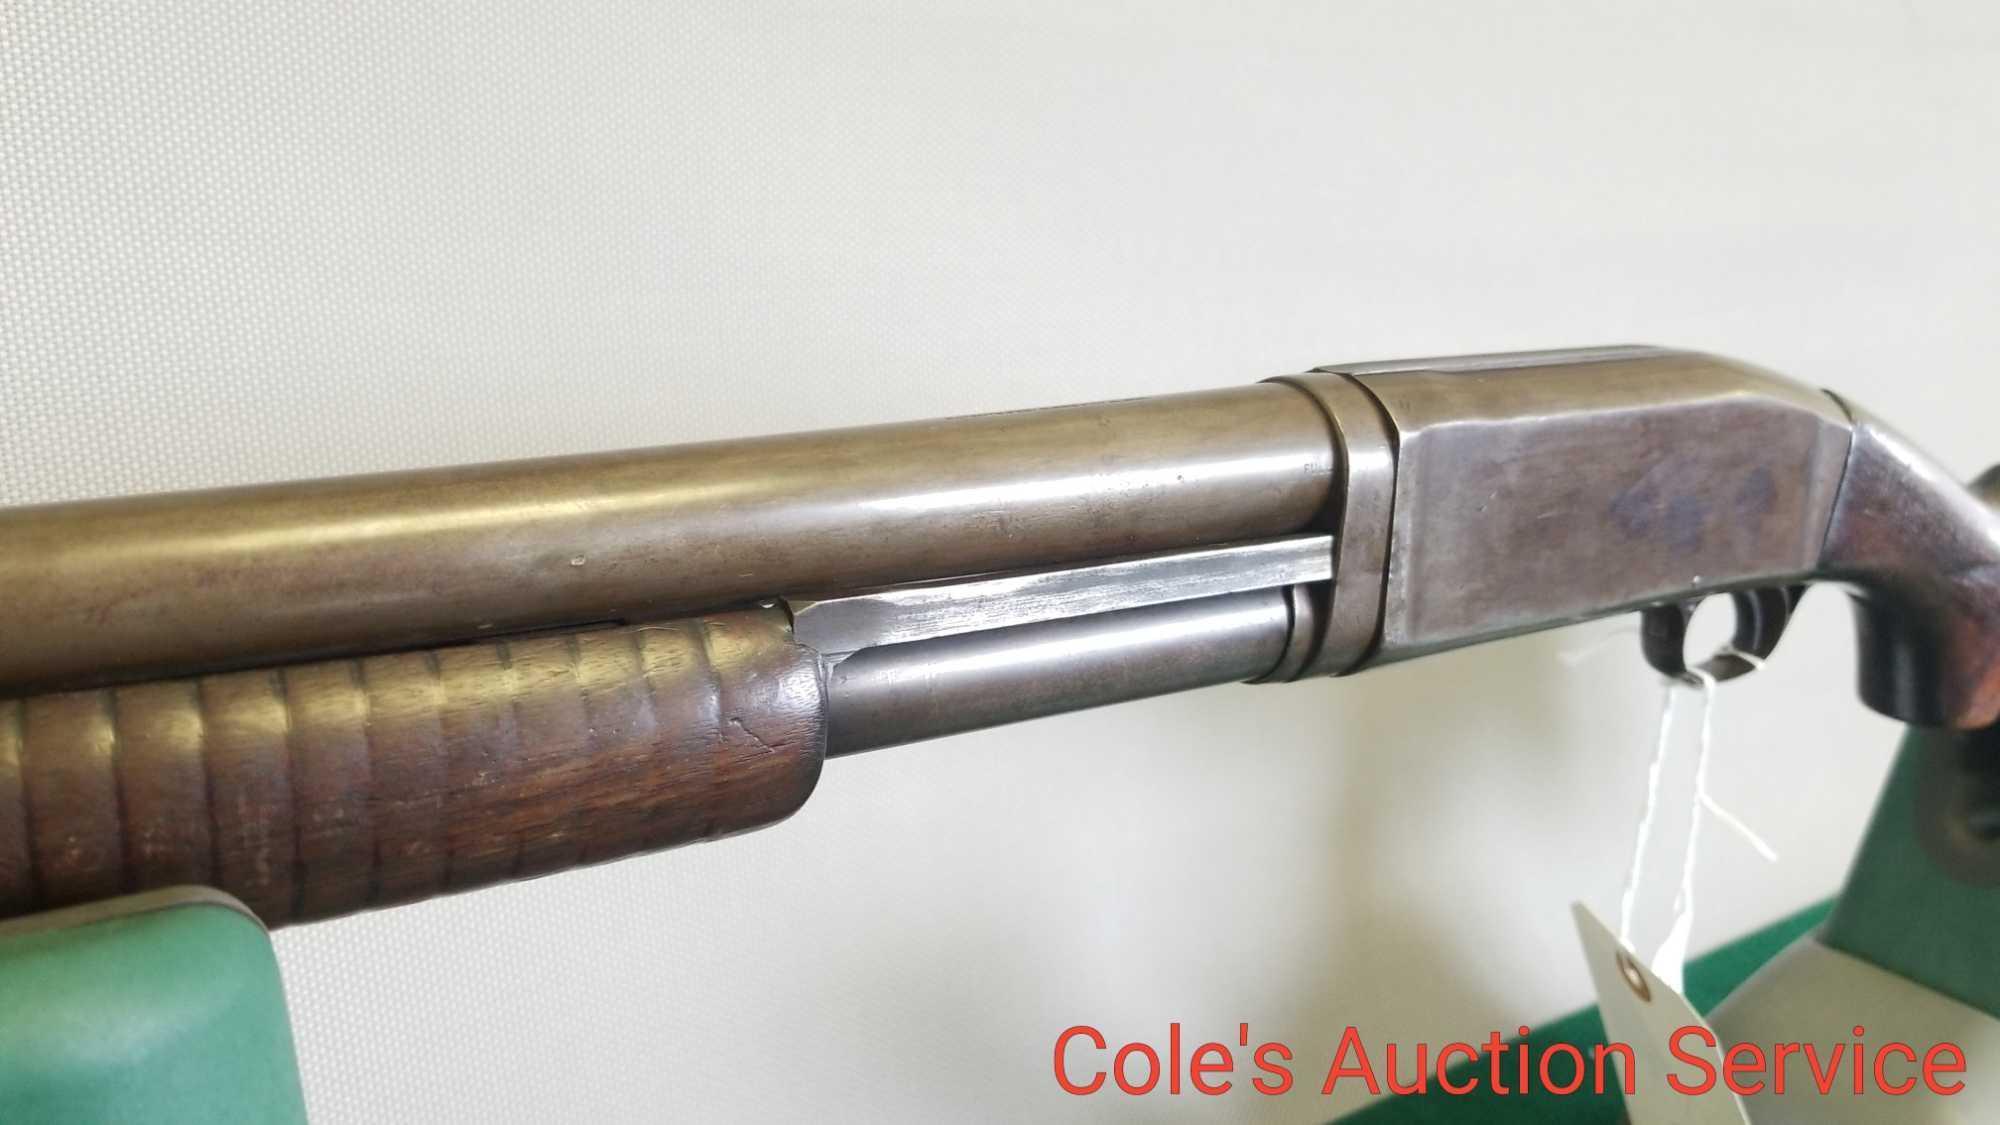 Remington 12-gauge repeating shotgun in good working condition. Serial number 17610, 12 gauge,